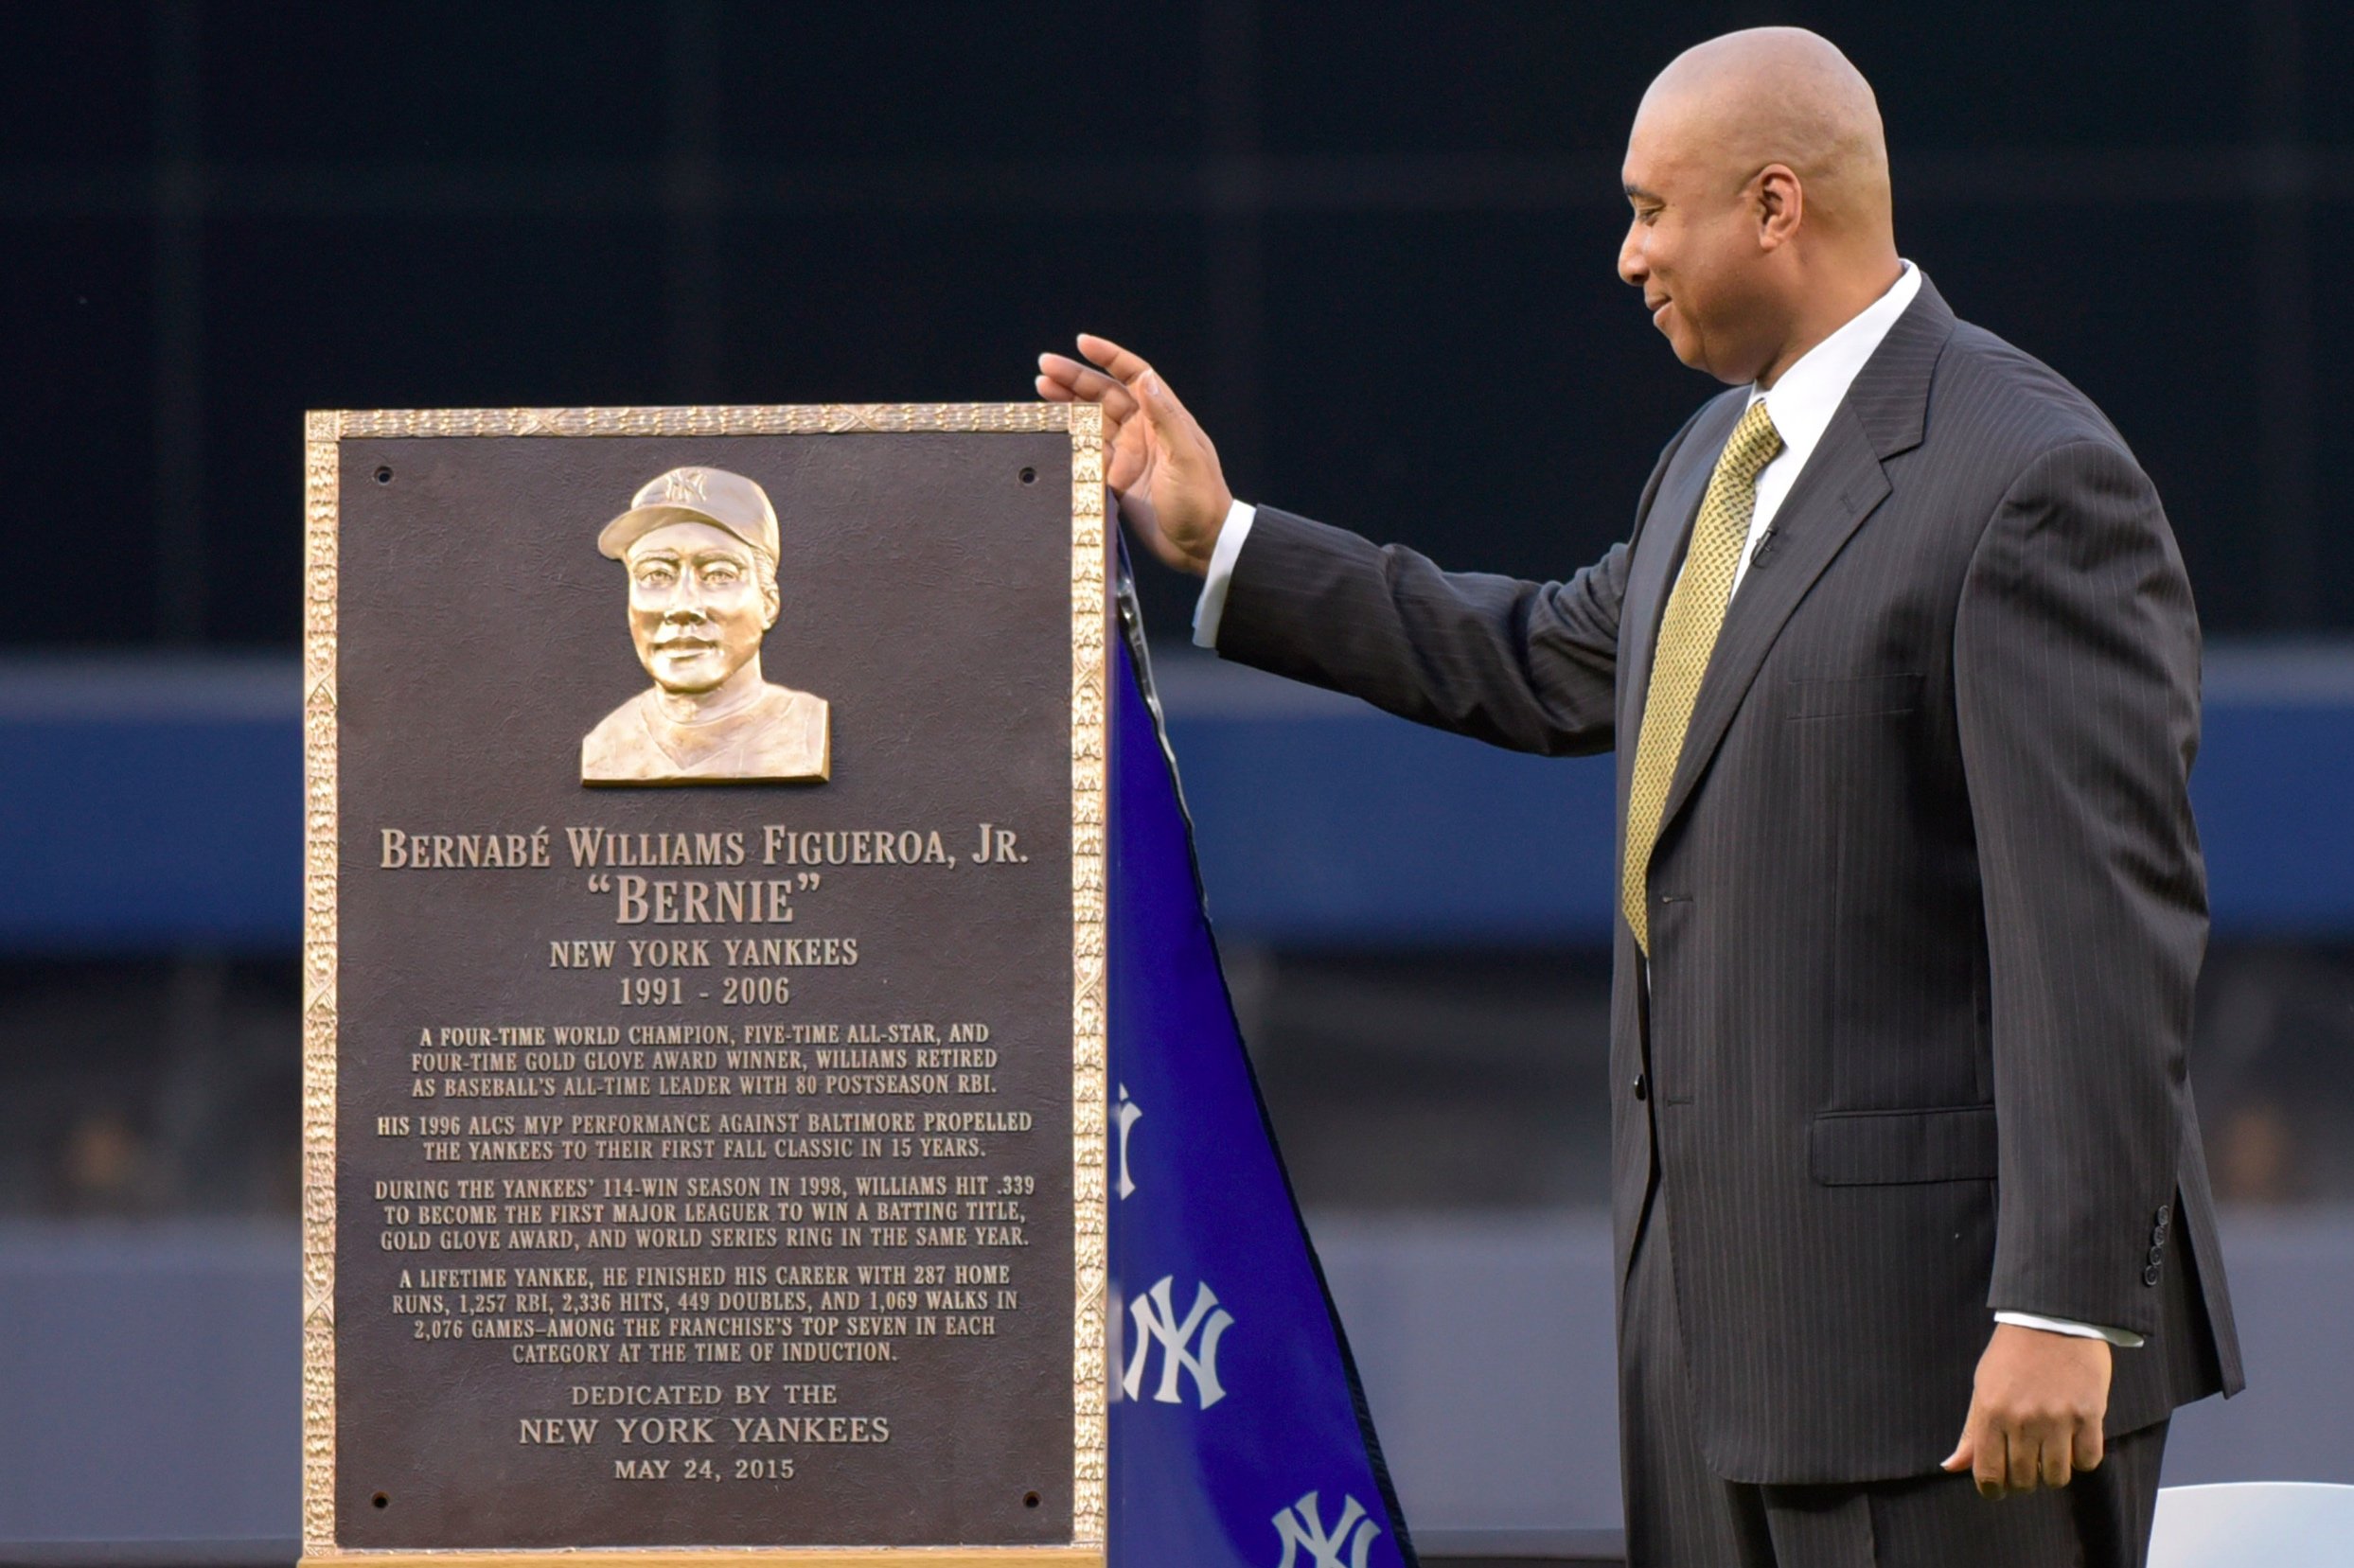 Yankees Baseball Legend Bernie Williams Raises Awareness of IPF